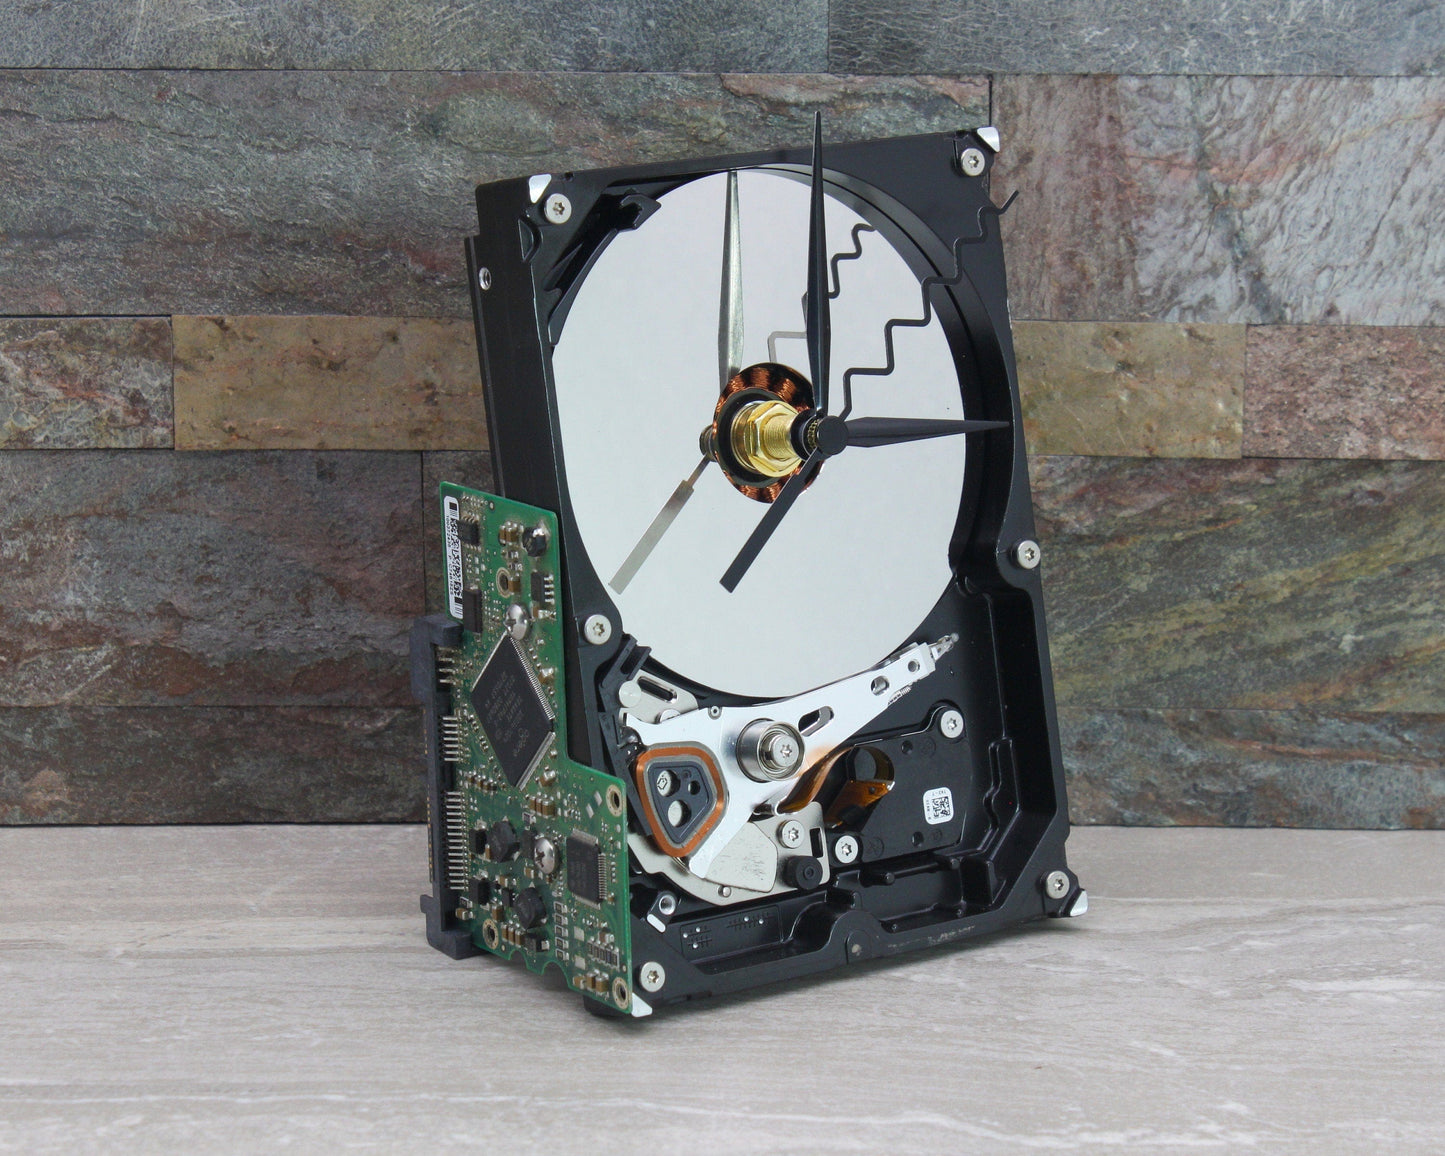 LightAndTimeArt Harddrive Clock Upcycled Black & Silver Open Center Hard Drive Clock - Modern Desk Clock - Gift for geeks, nerds, office, new job gift, industrial IT design